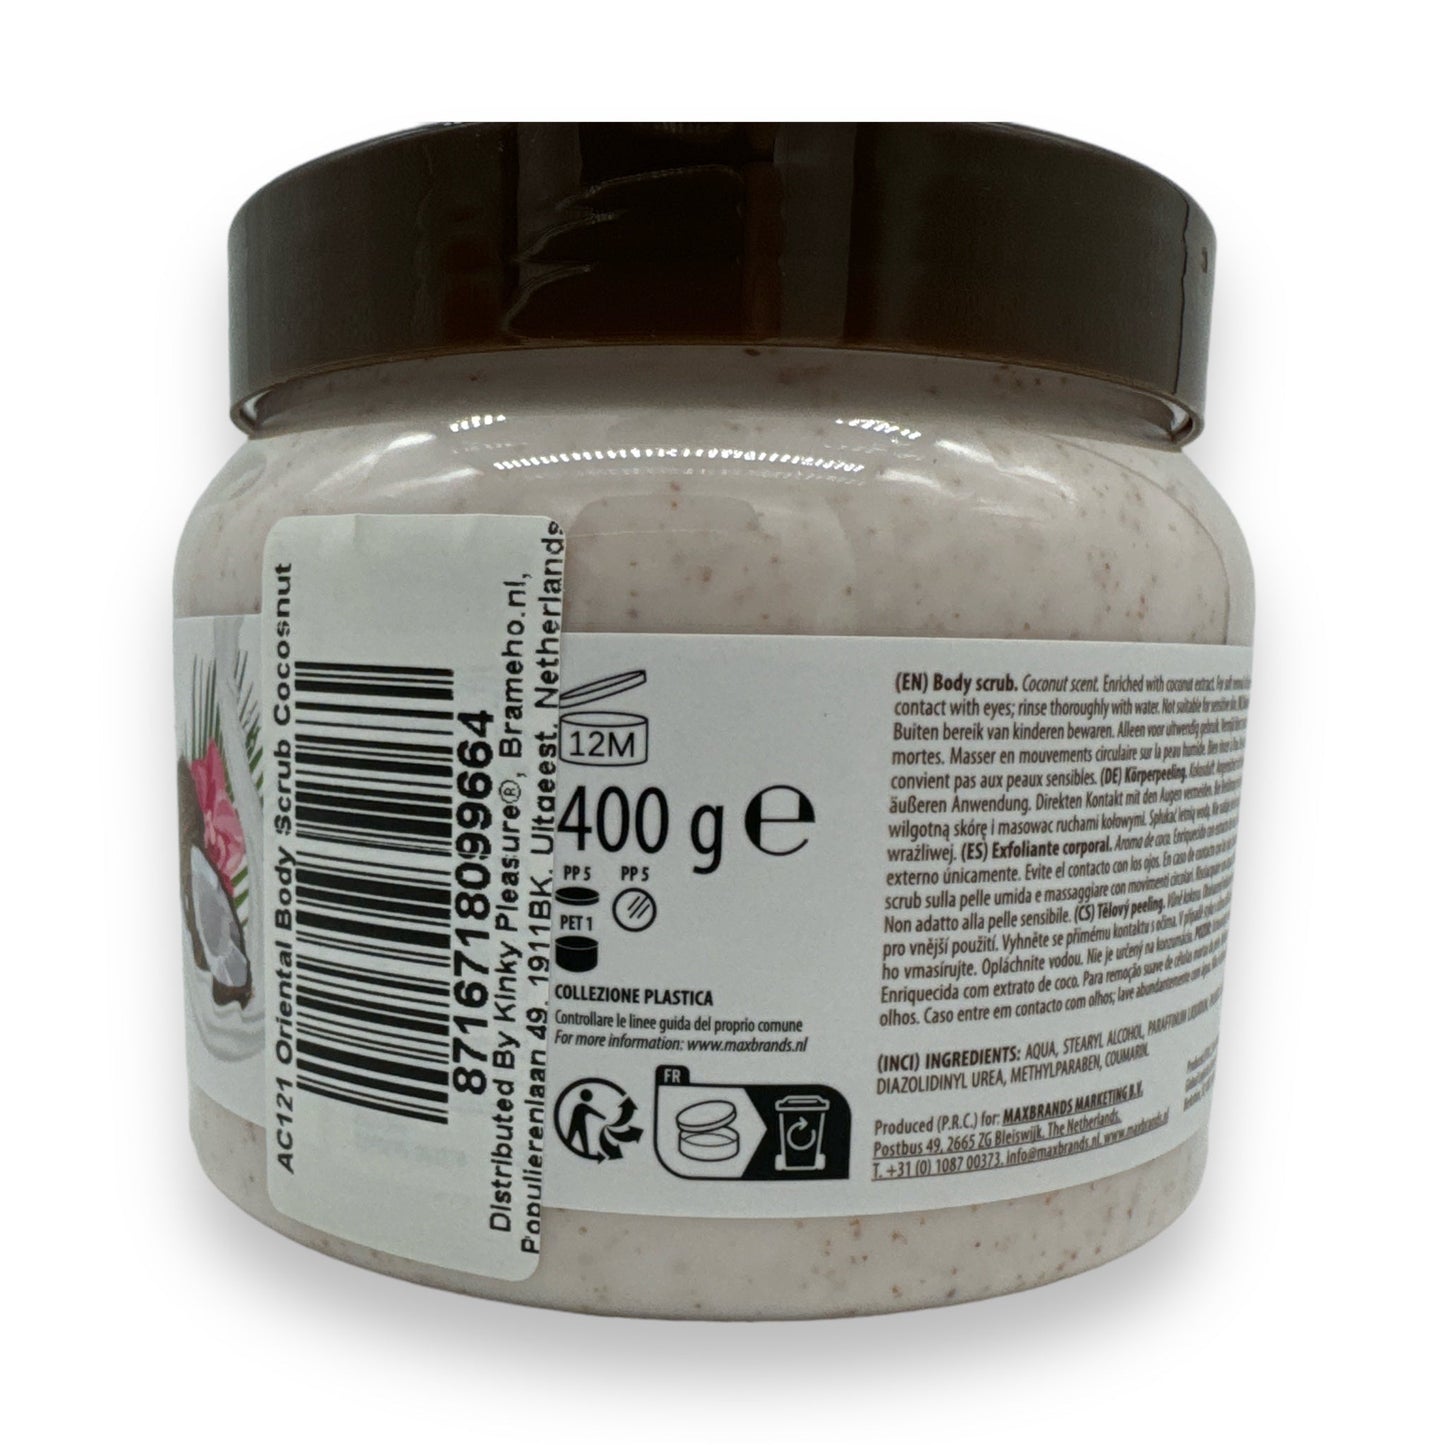 Oriental Body Scrub Coconut - 400 Grams